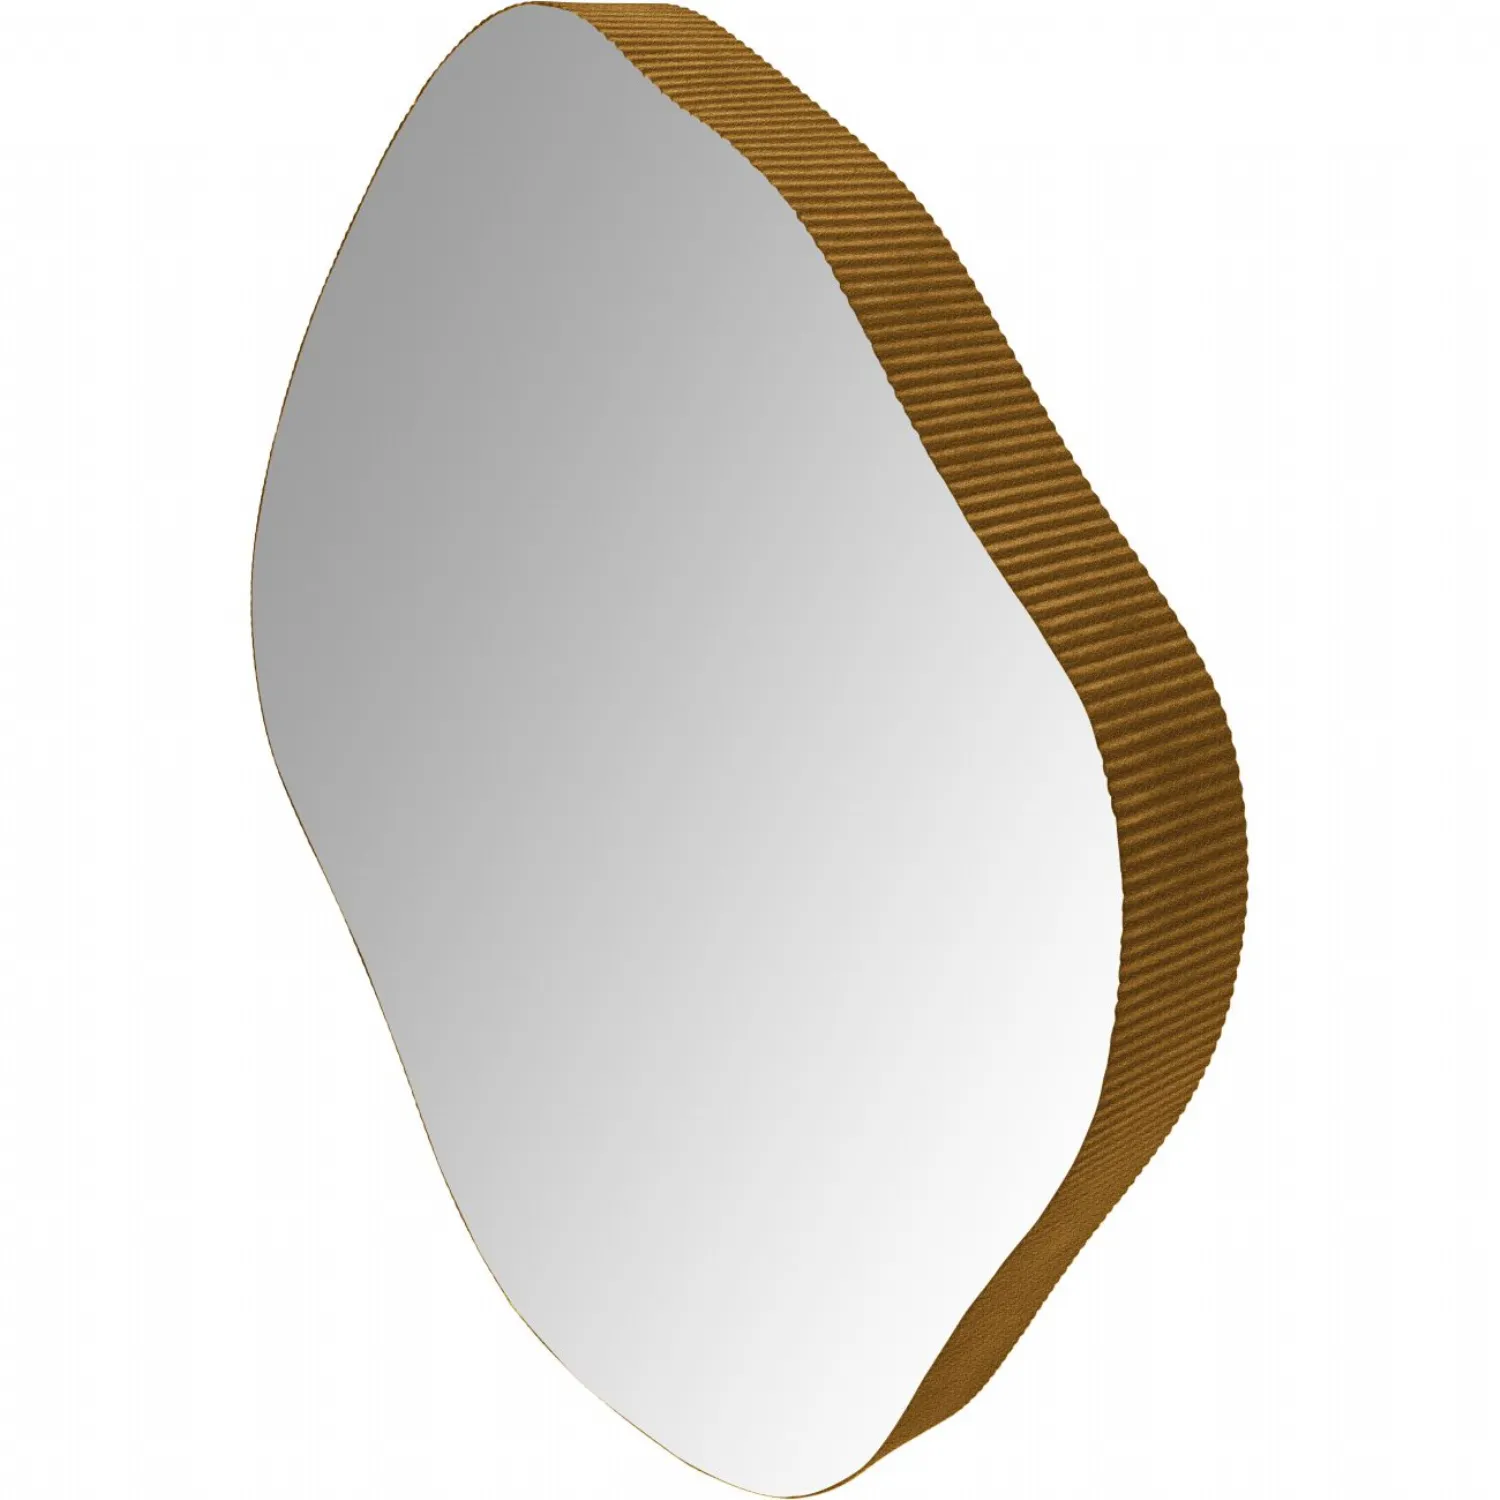 Aged Champagne Gold Irregular Shaped Metal Wall Mirror